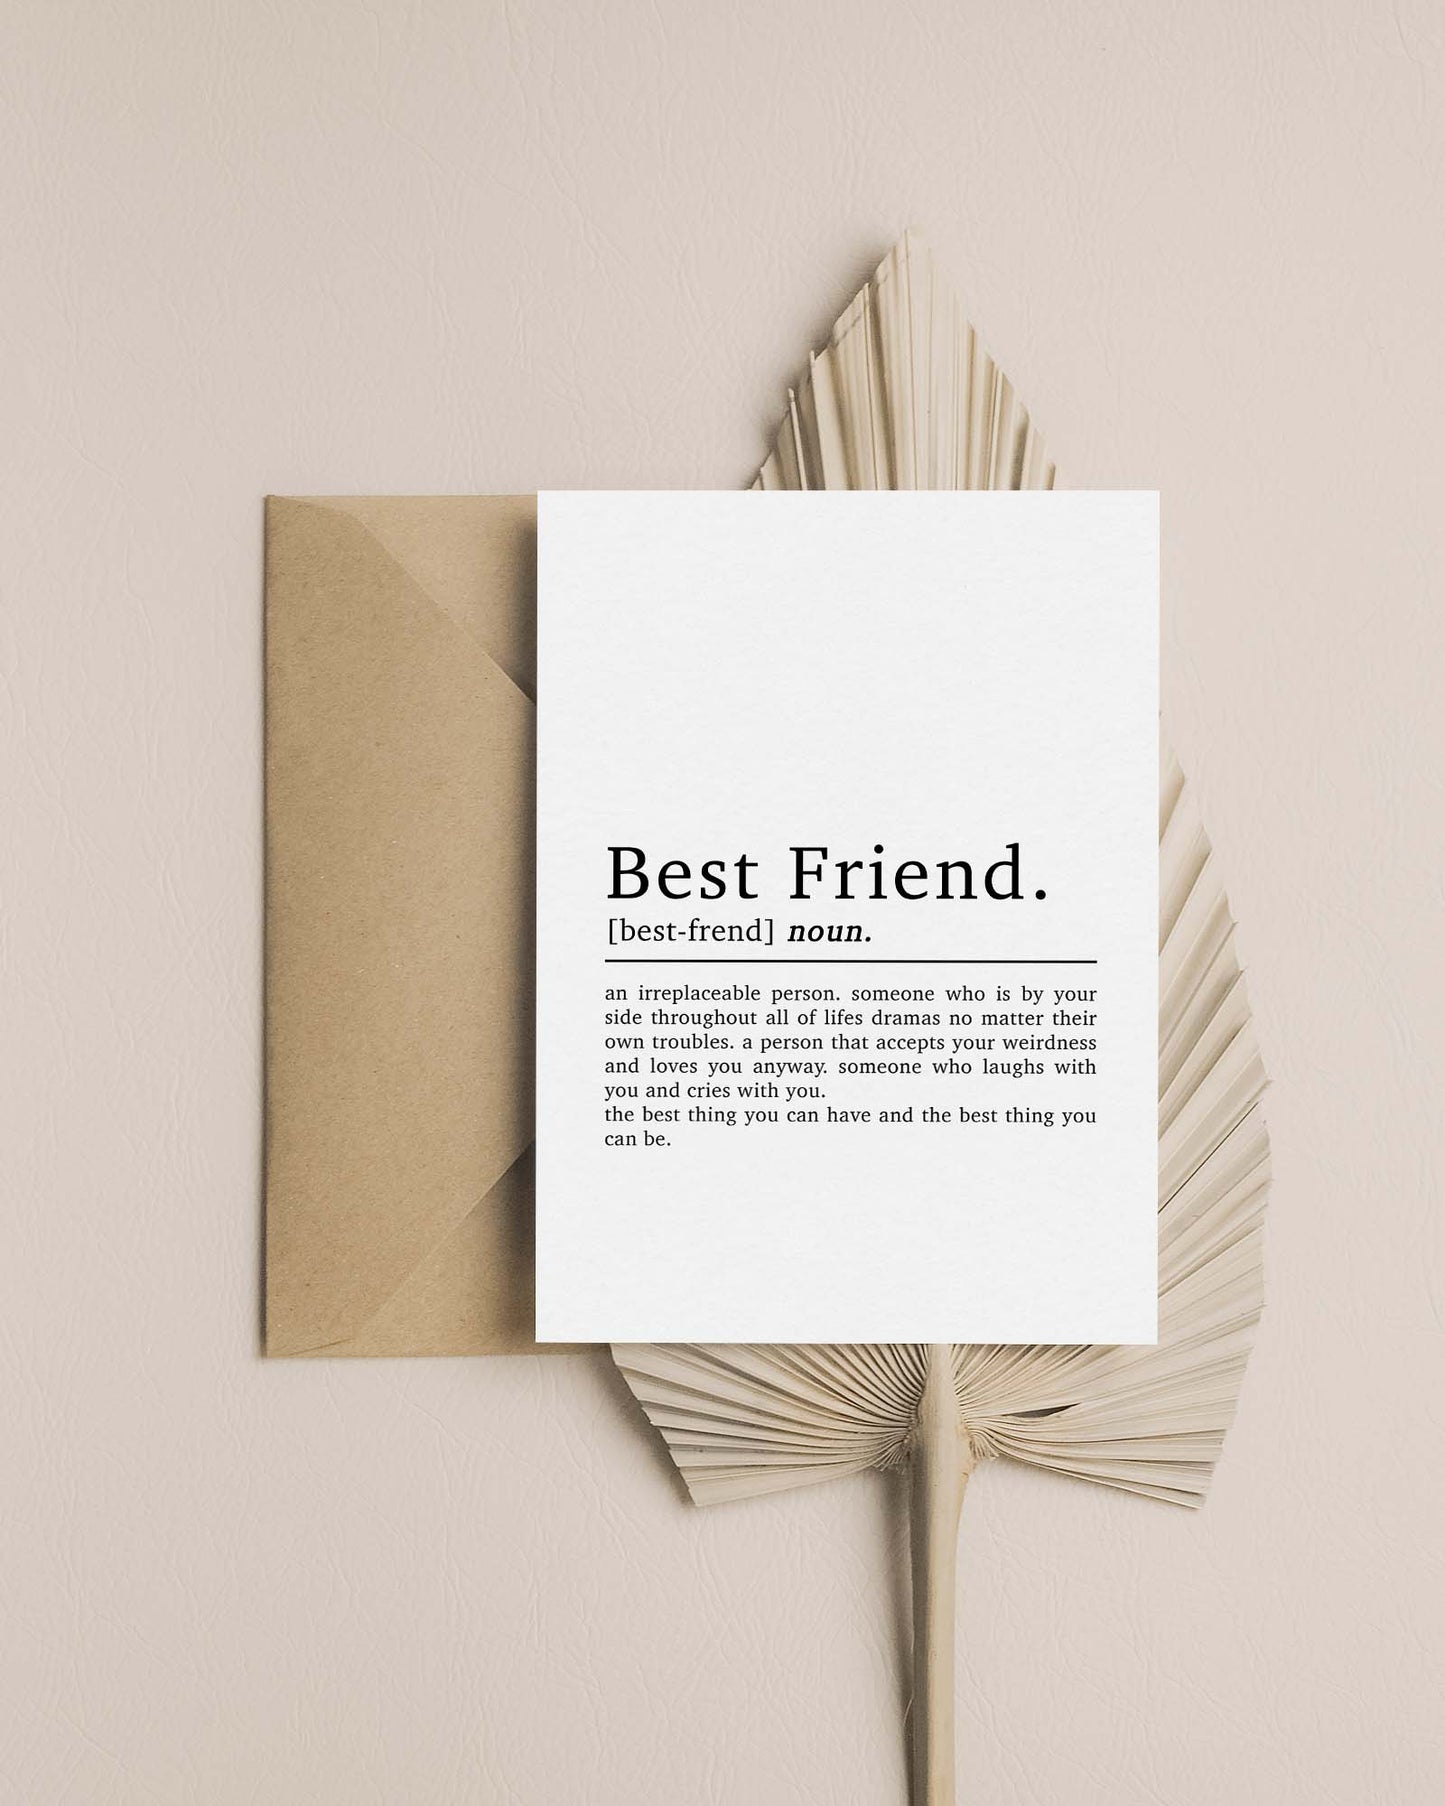 Best Friend Definition Card